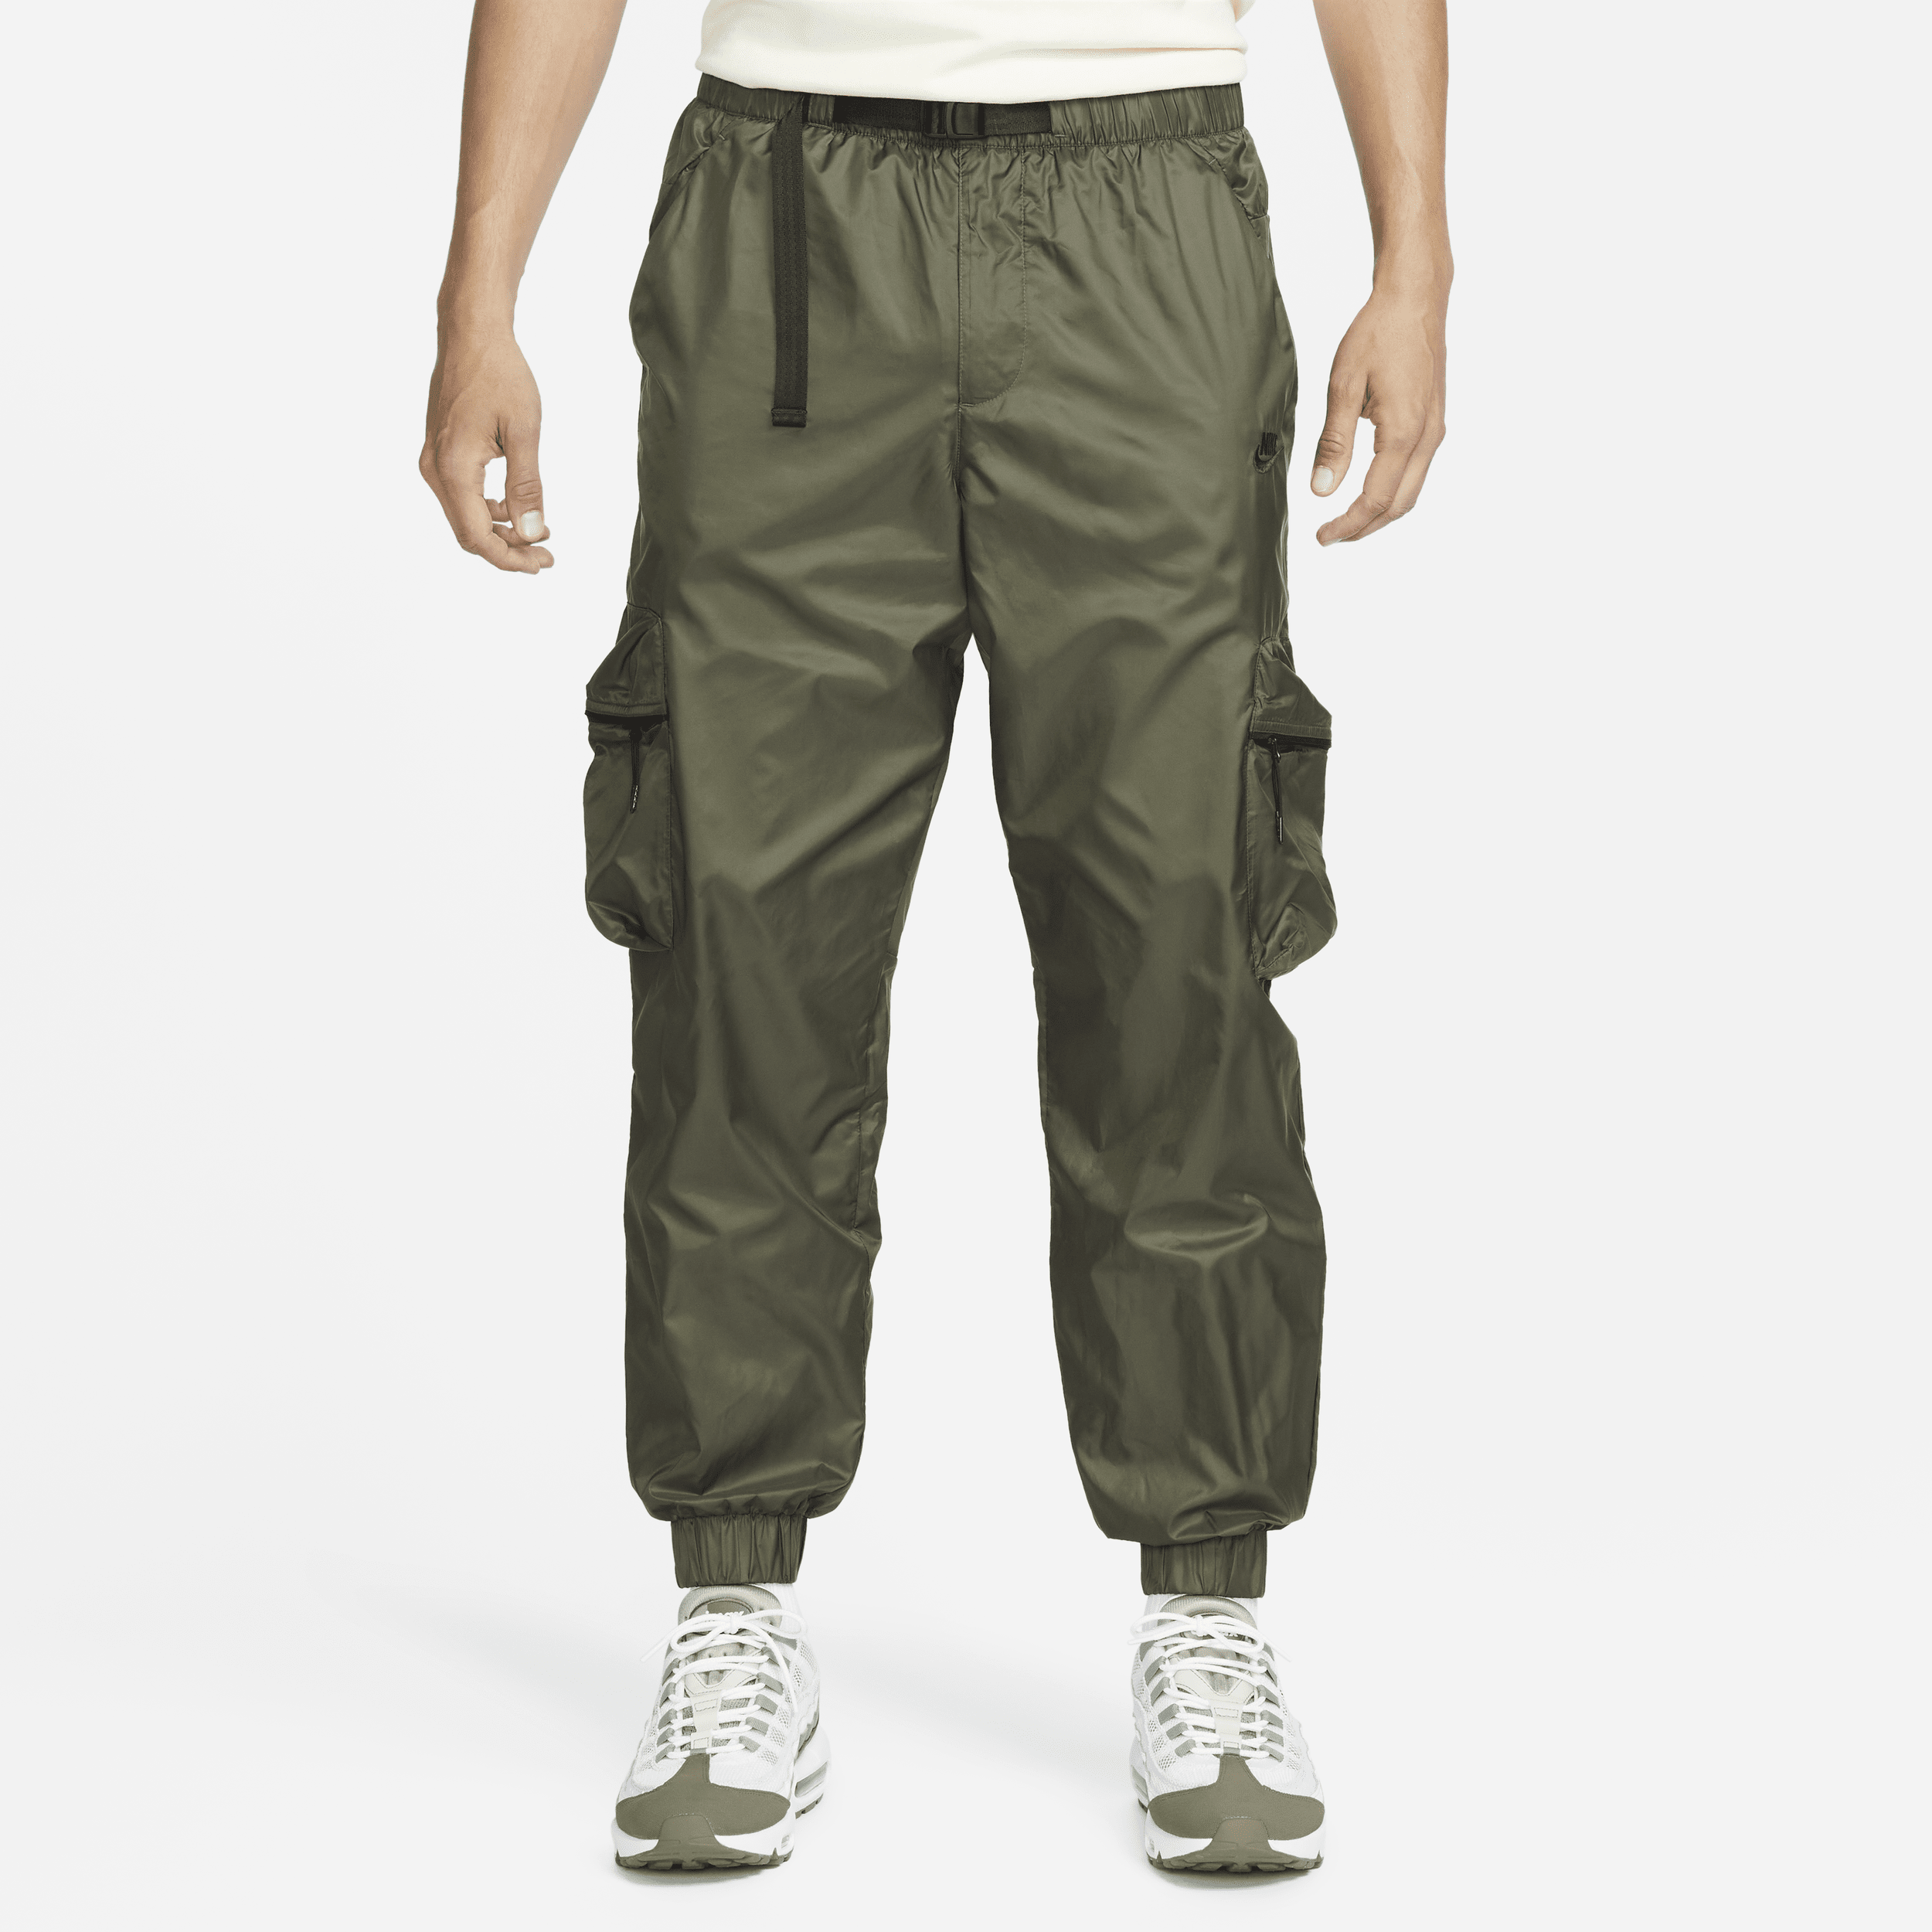 Pantaloni in tessuto con fodera Nike Tech – Uomo - Verde